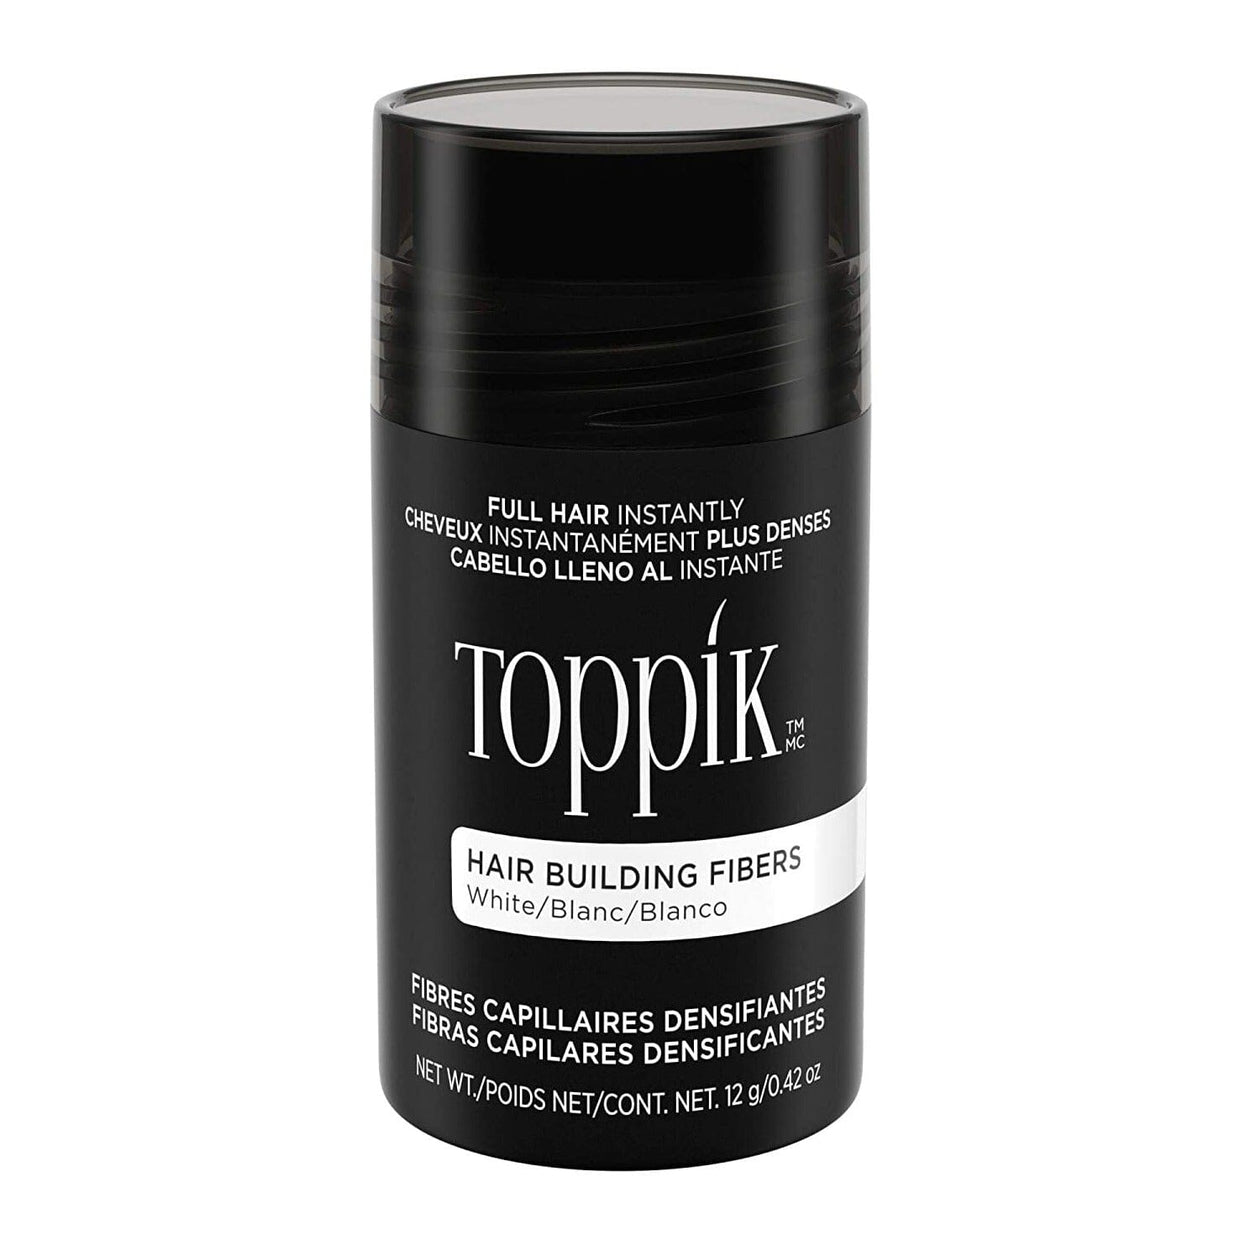 Toppik Hair Building Fibers - GRAY Hair Loss Concealers Toppik 0.42 oz Shop at Exclusive Beauty Club